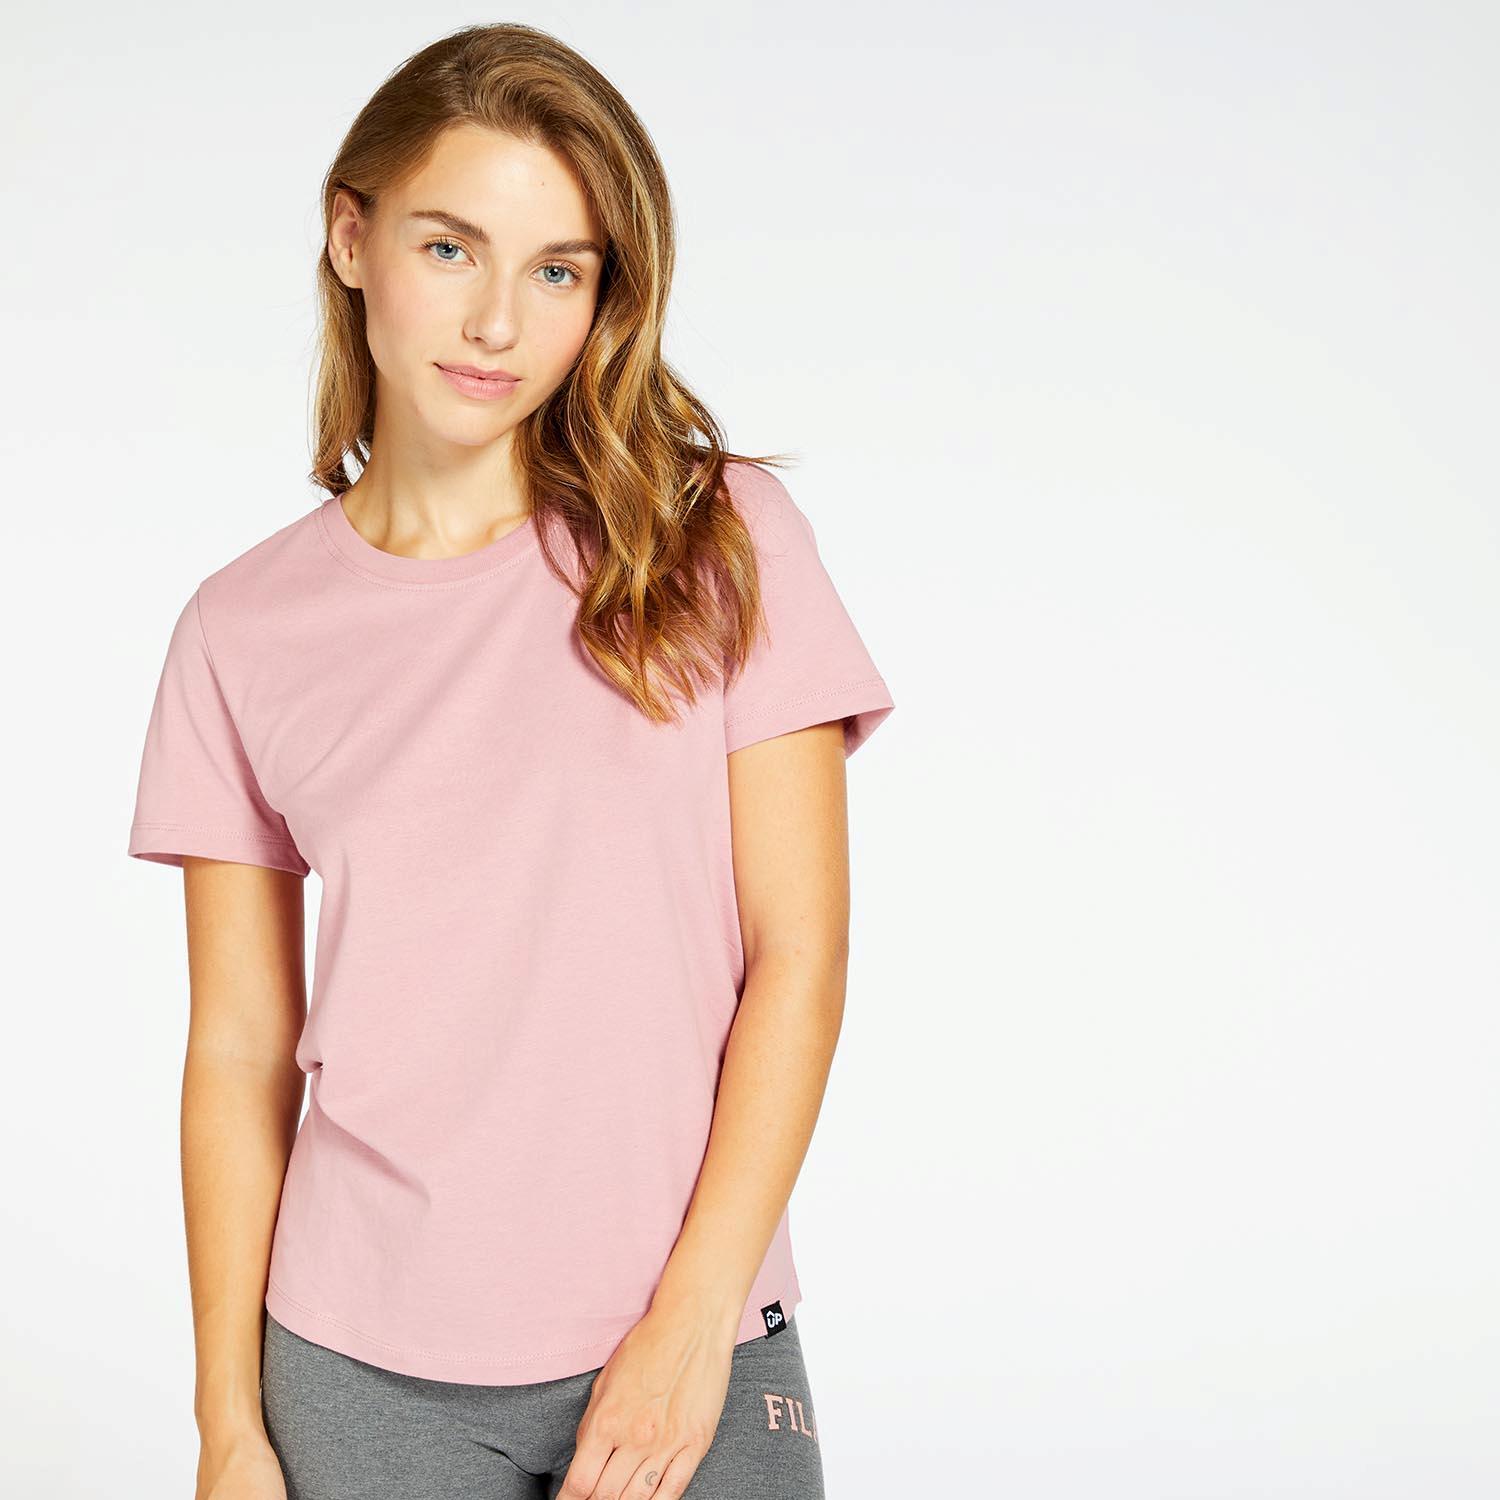 Up Basic - Rosa - Camiseta Mujer talla S